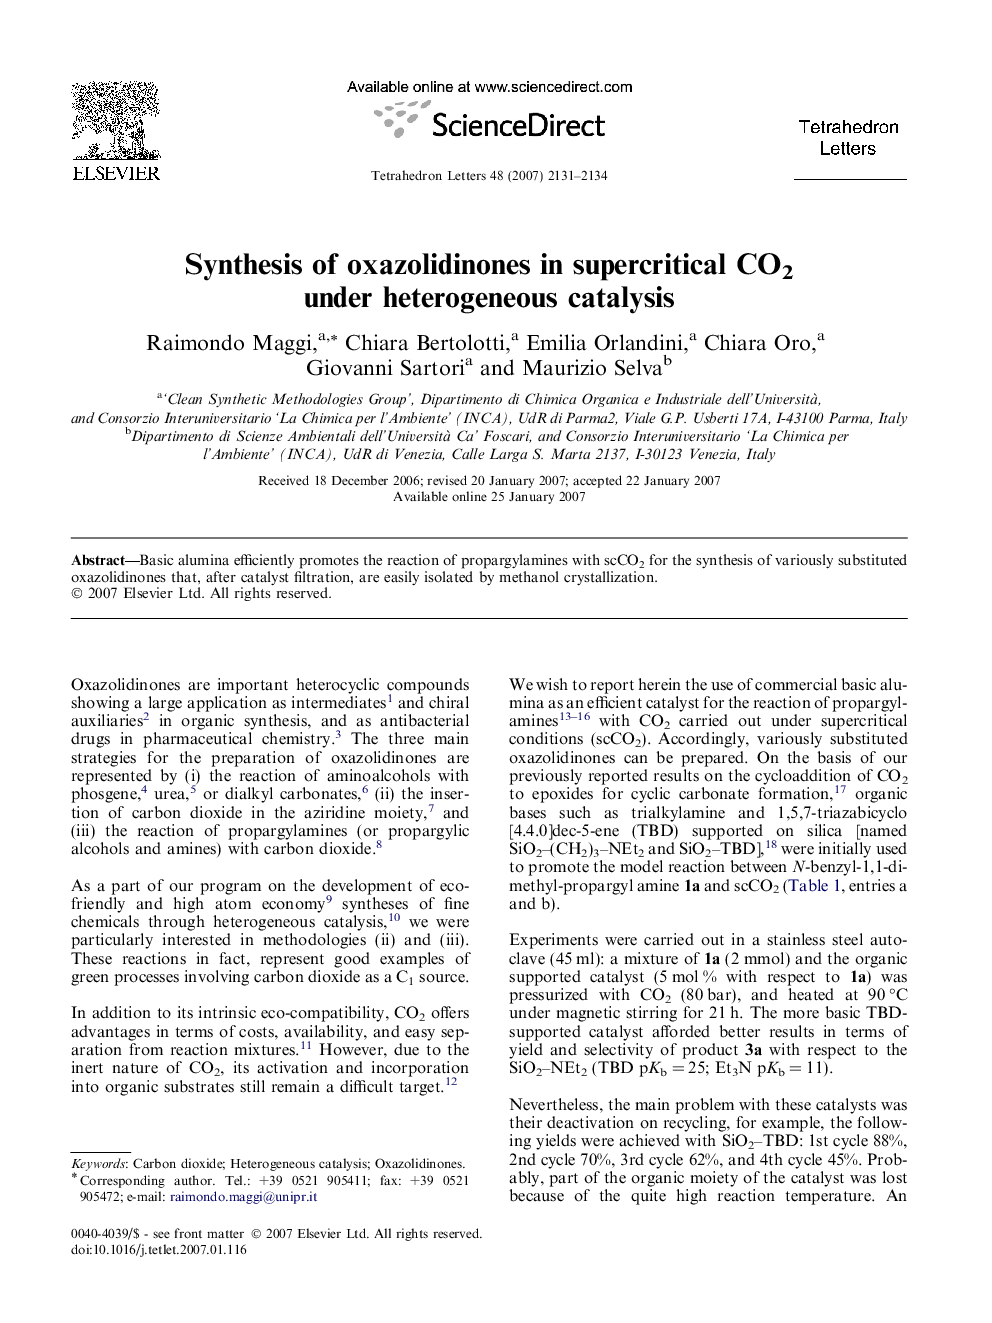 Synthesis of oxazolidinones in supercritical CO2 under heterogeneous catalysis